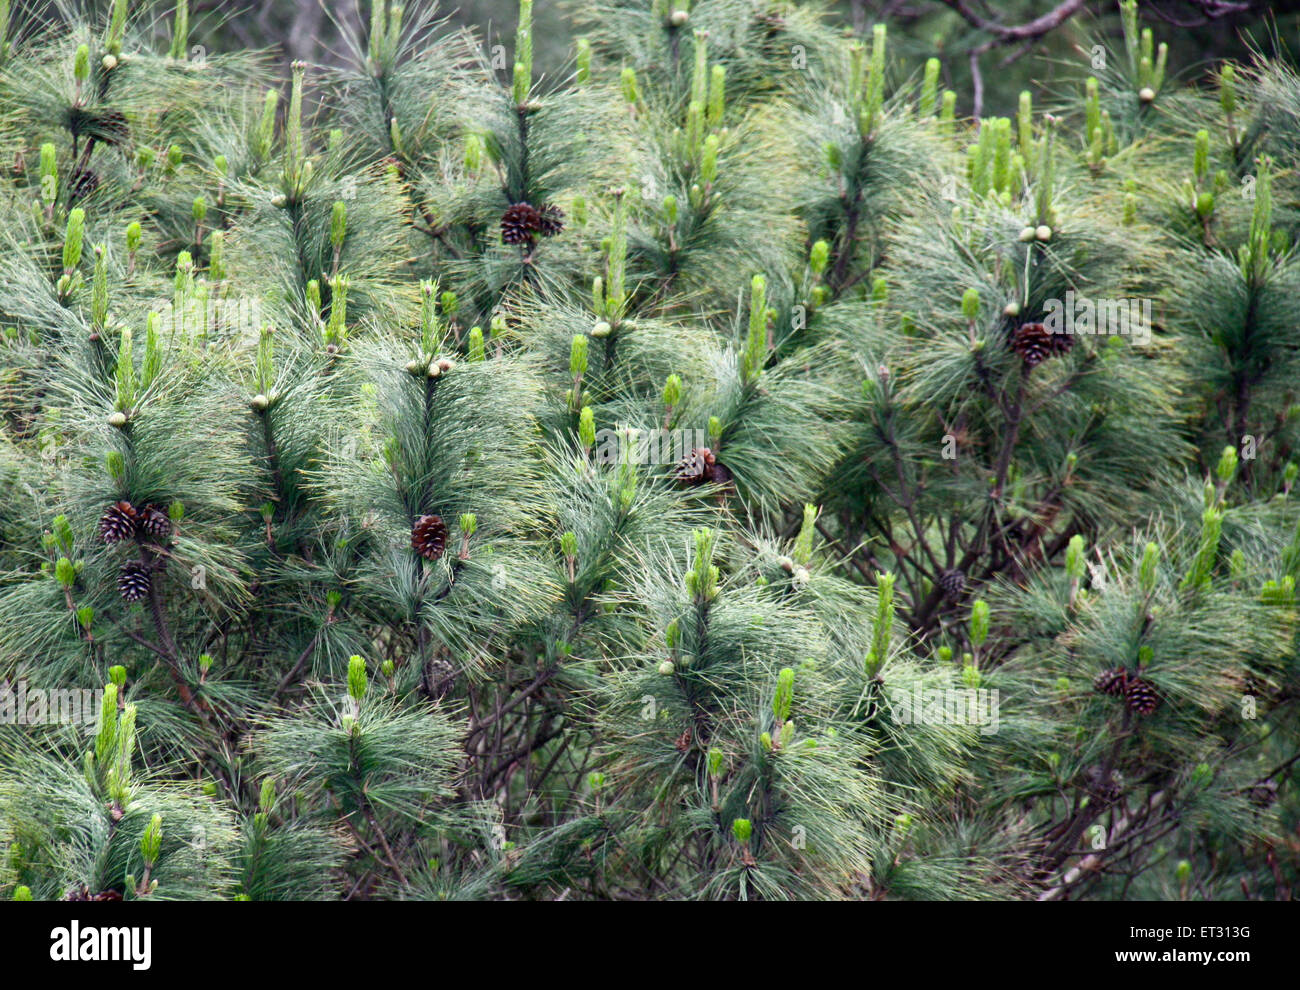 Natural beautiful ornament pine trees. Stock Photo